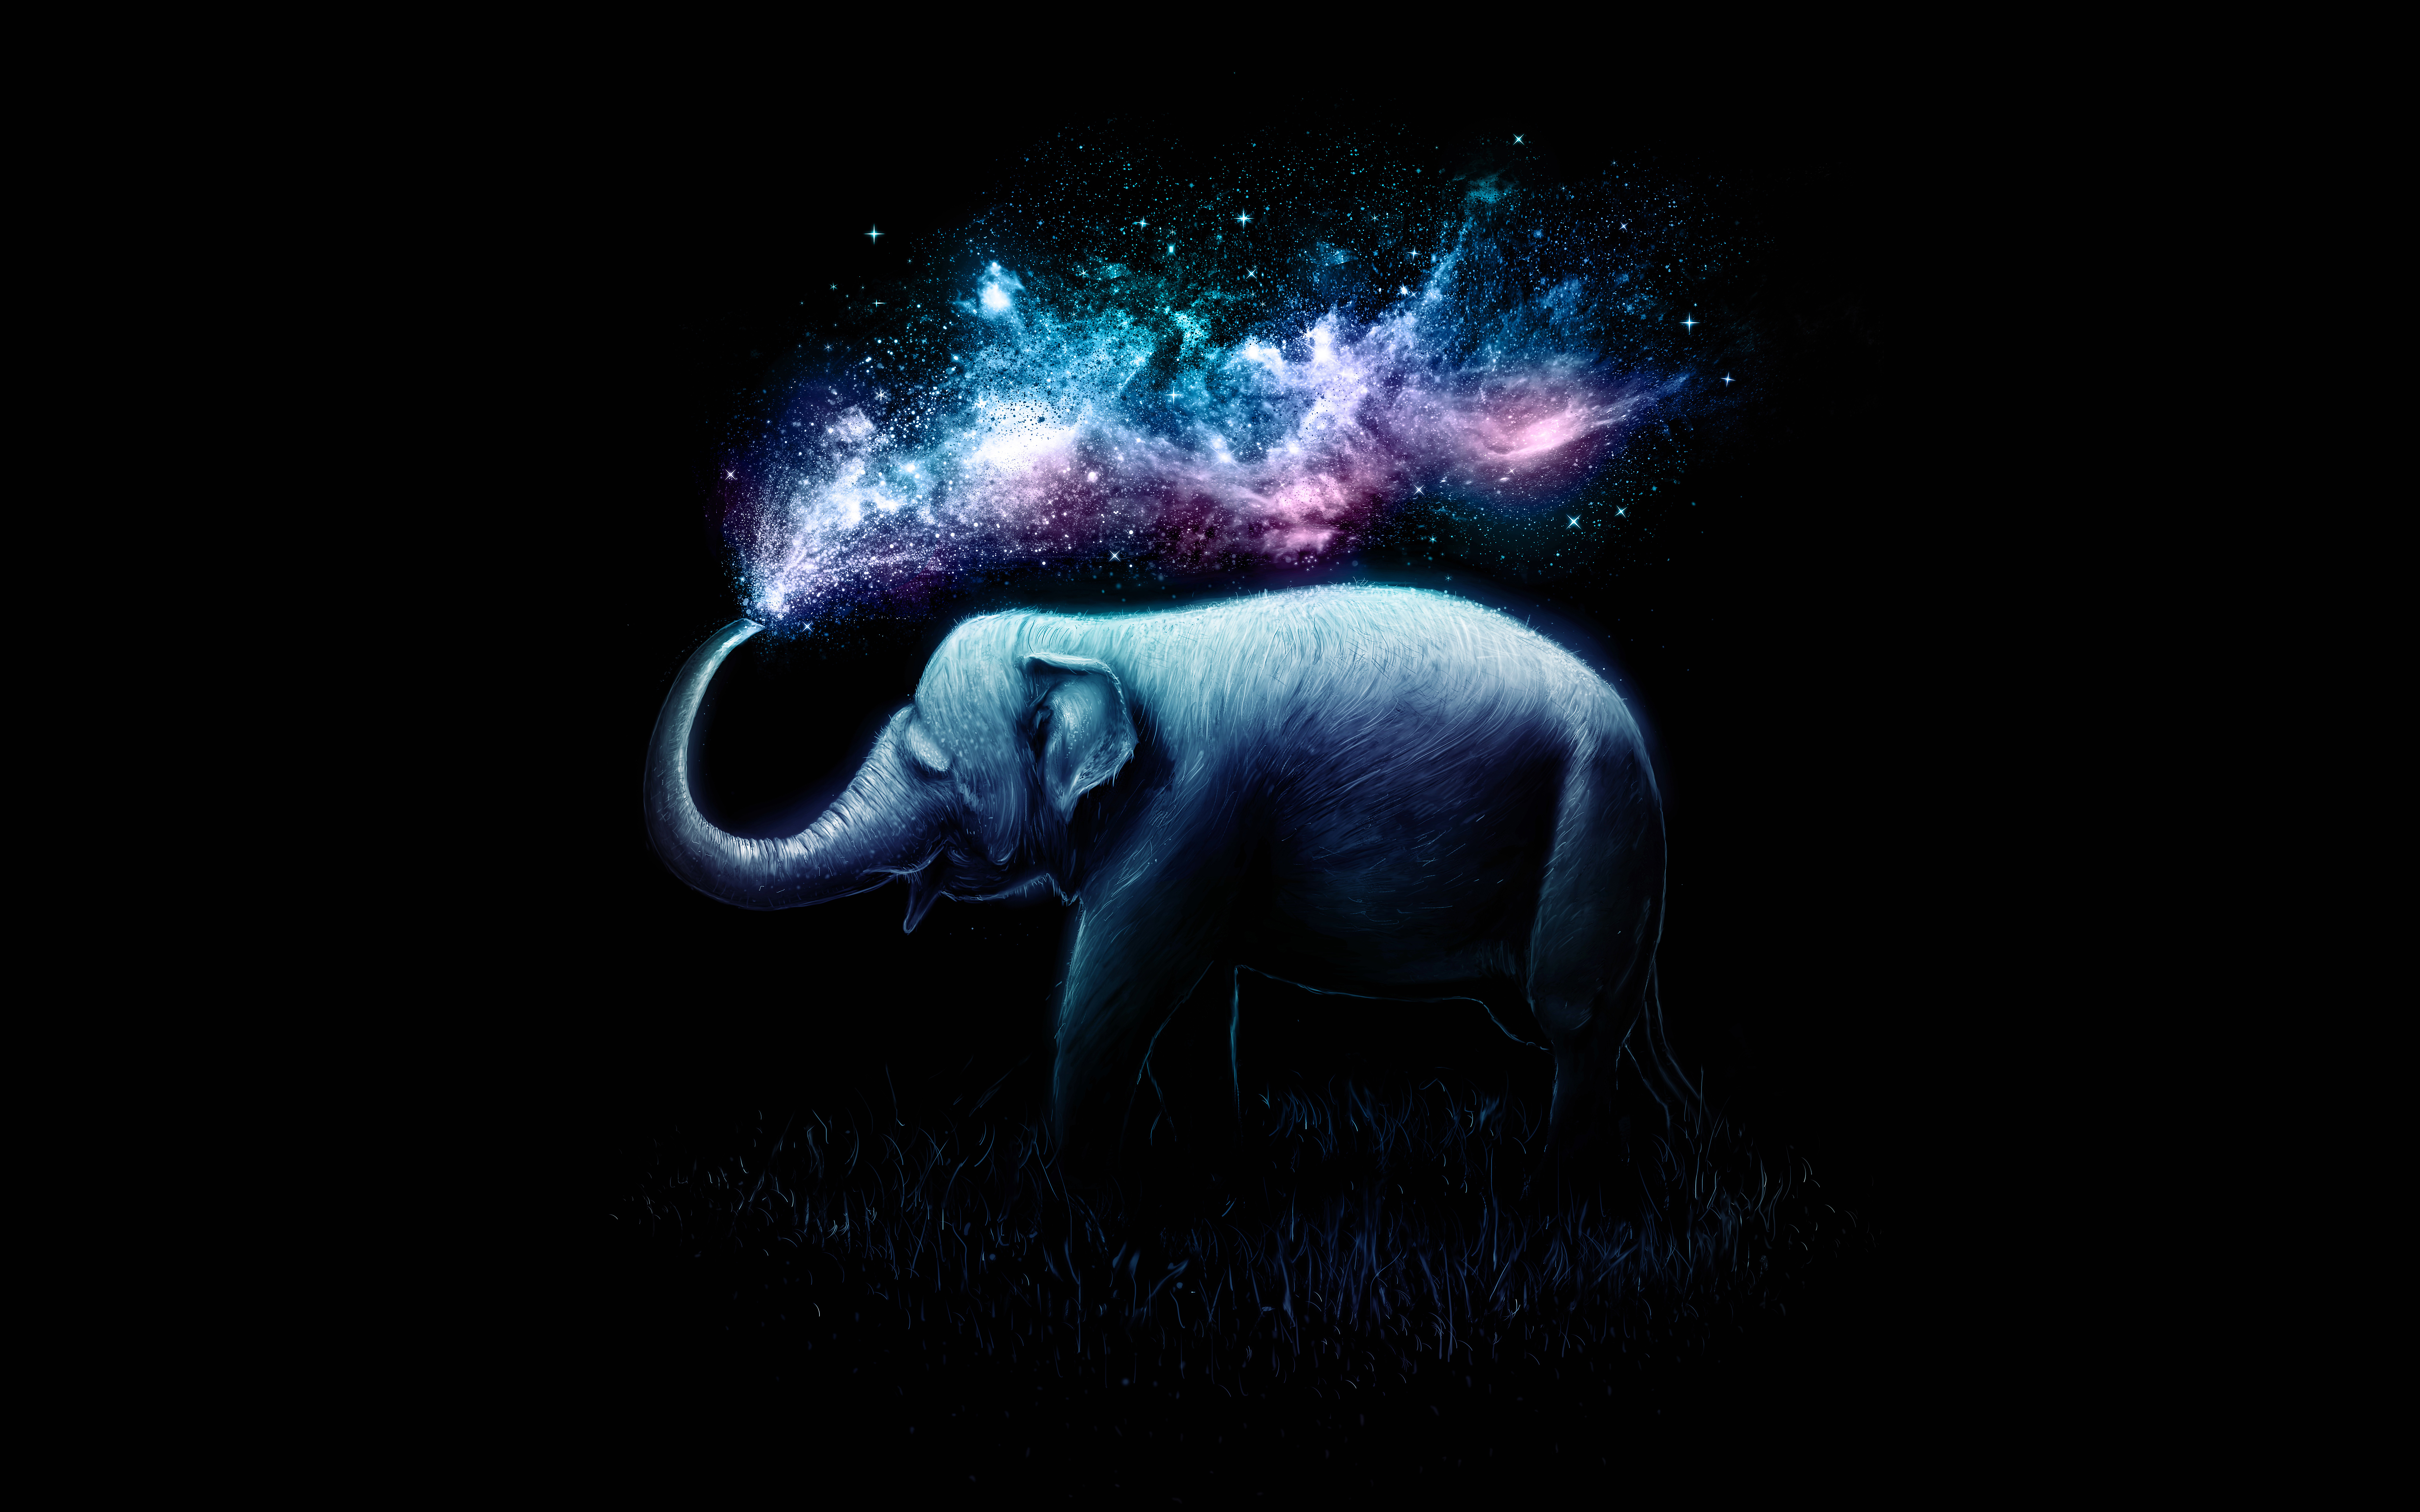 Elephant Wallpaper 4K, Colorful, Surreal, Fantasy, #3960